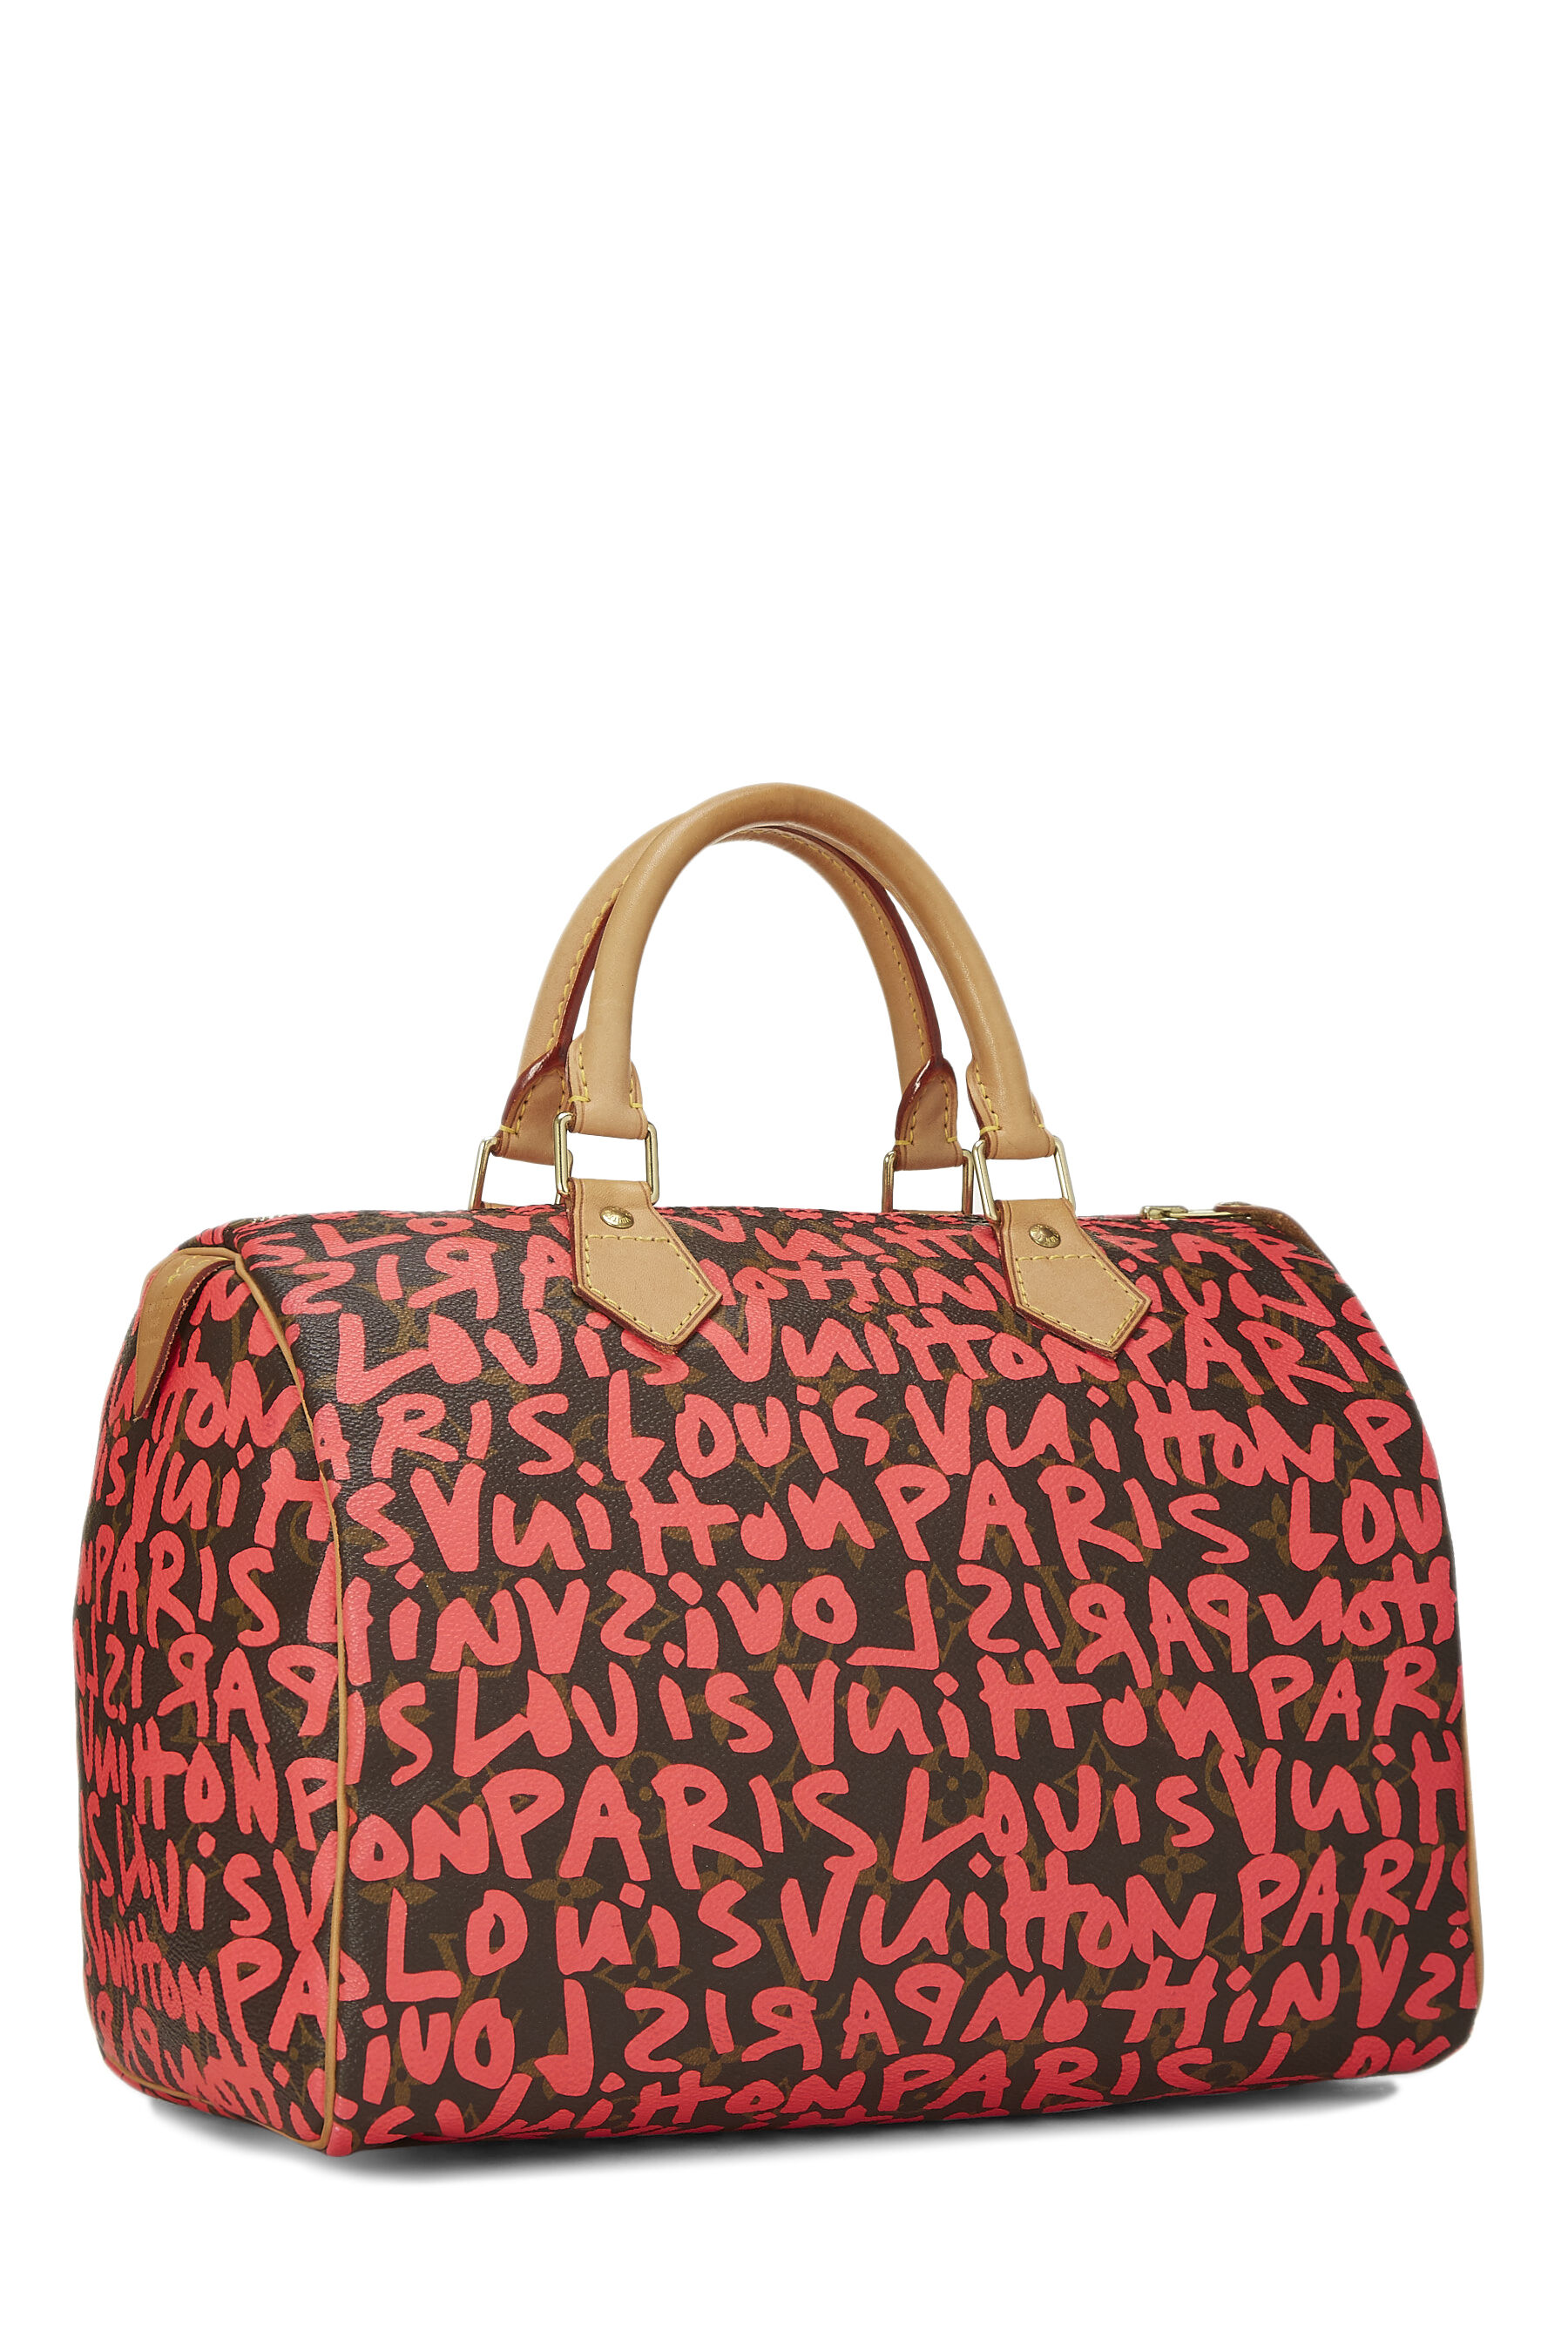 Louis Vuitton Stephen Sprouse Graffiti Roses Speedy 30 Bag Flower 421lvs528